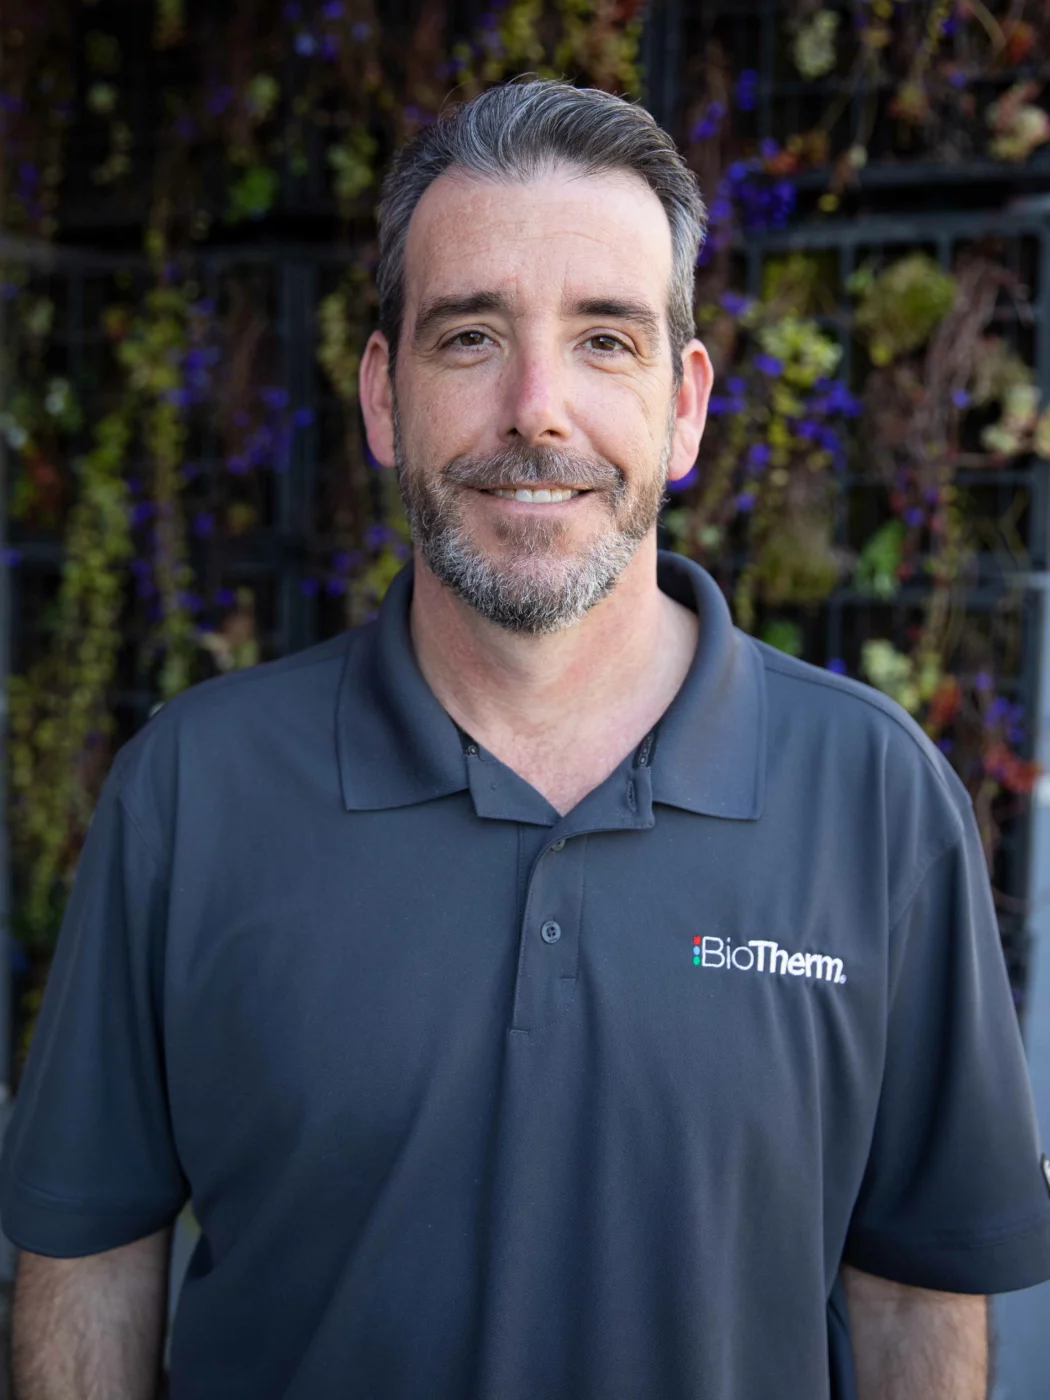 biotherm solutions staff member Kevin Strickland